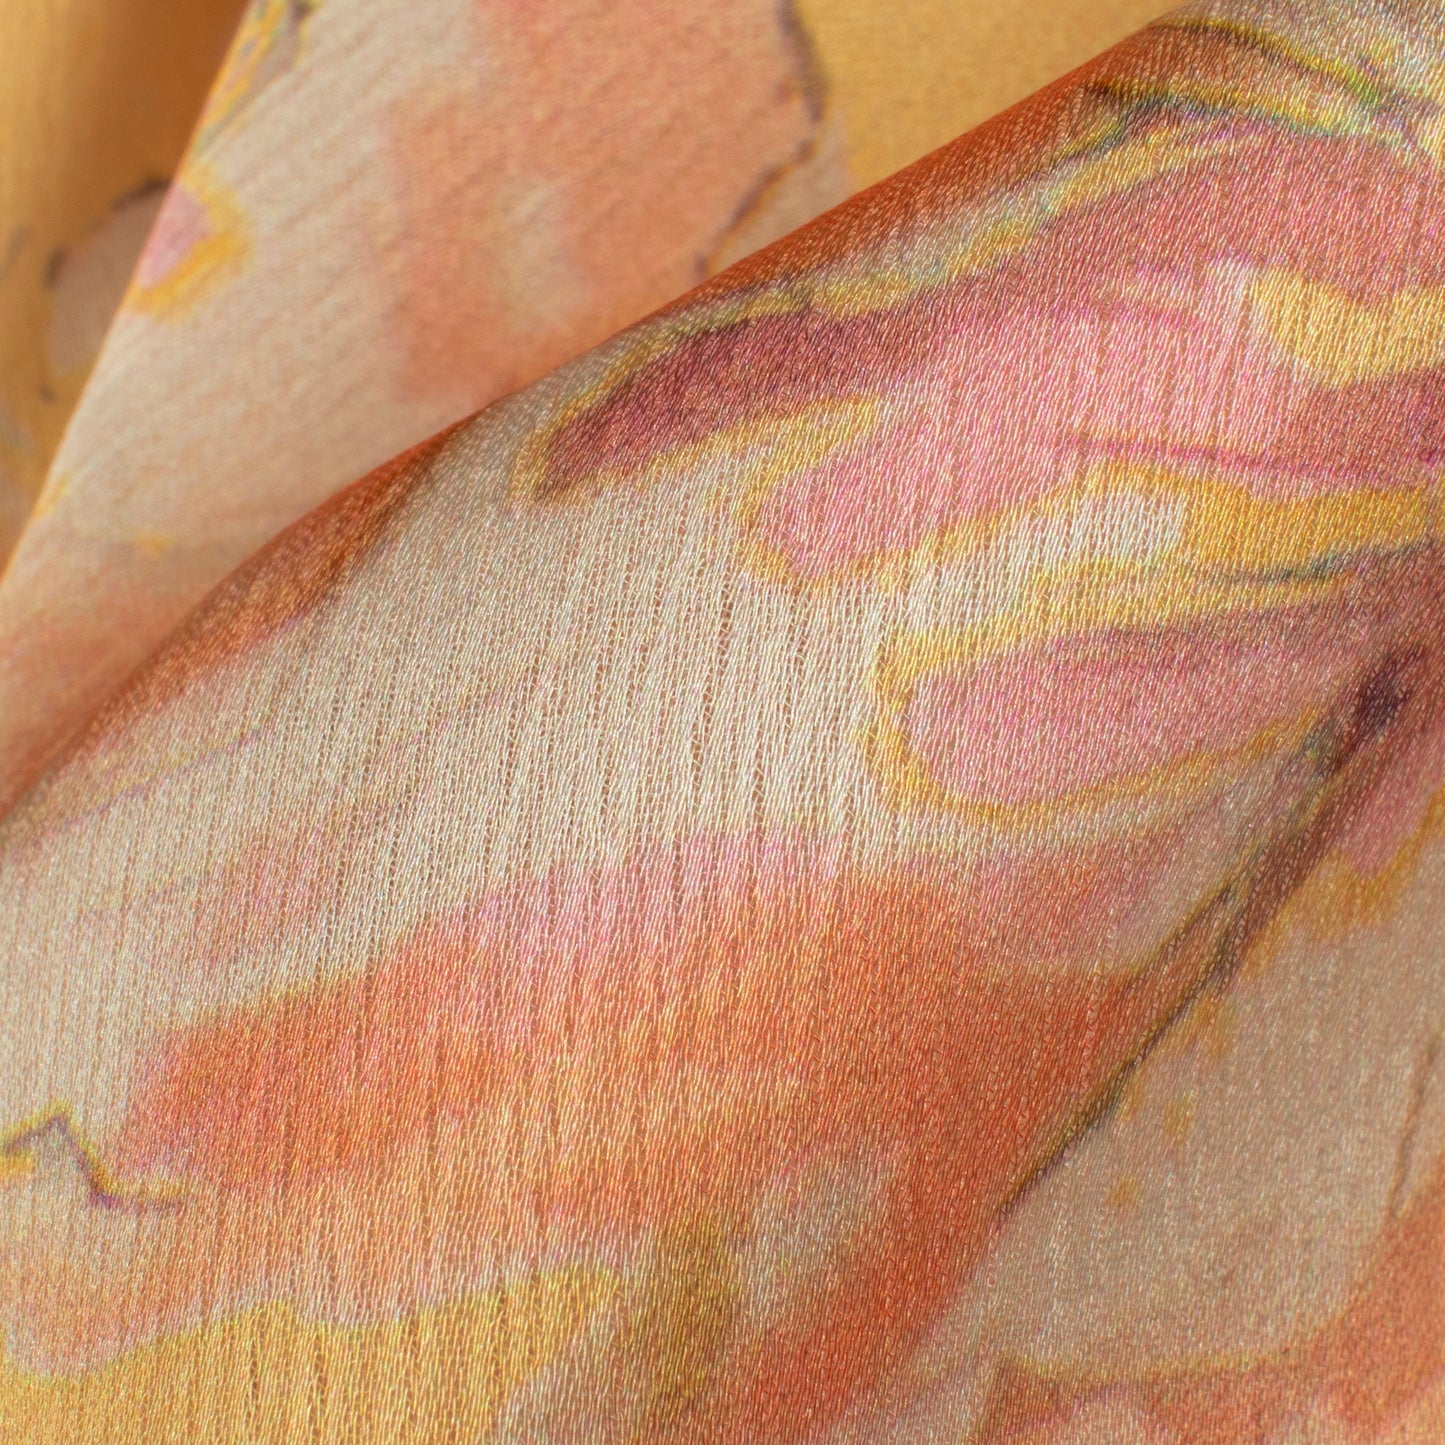 Pastle Yellow Floral Digital Print Chiffon Satin Fabric